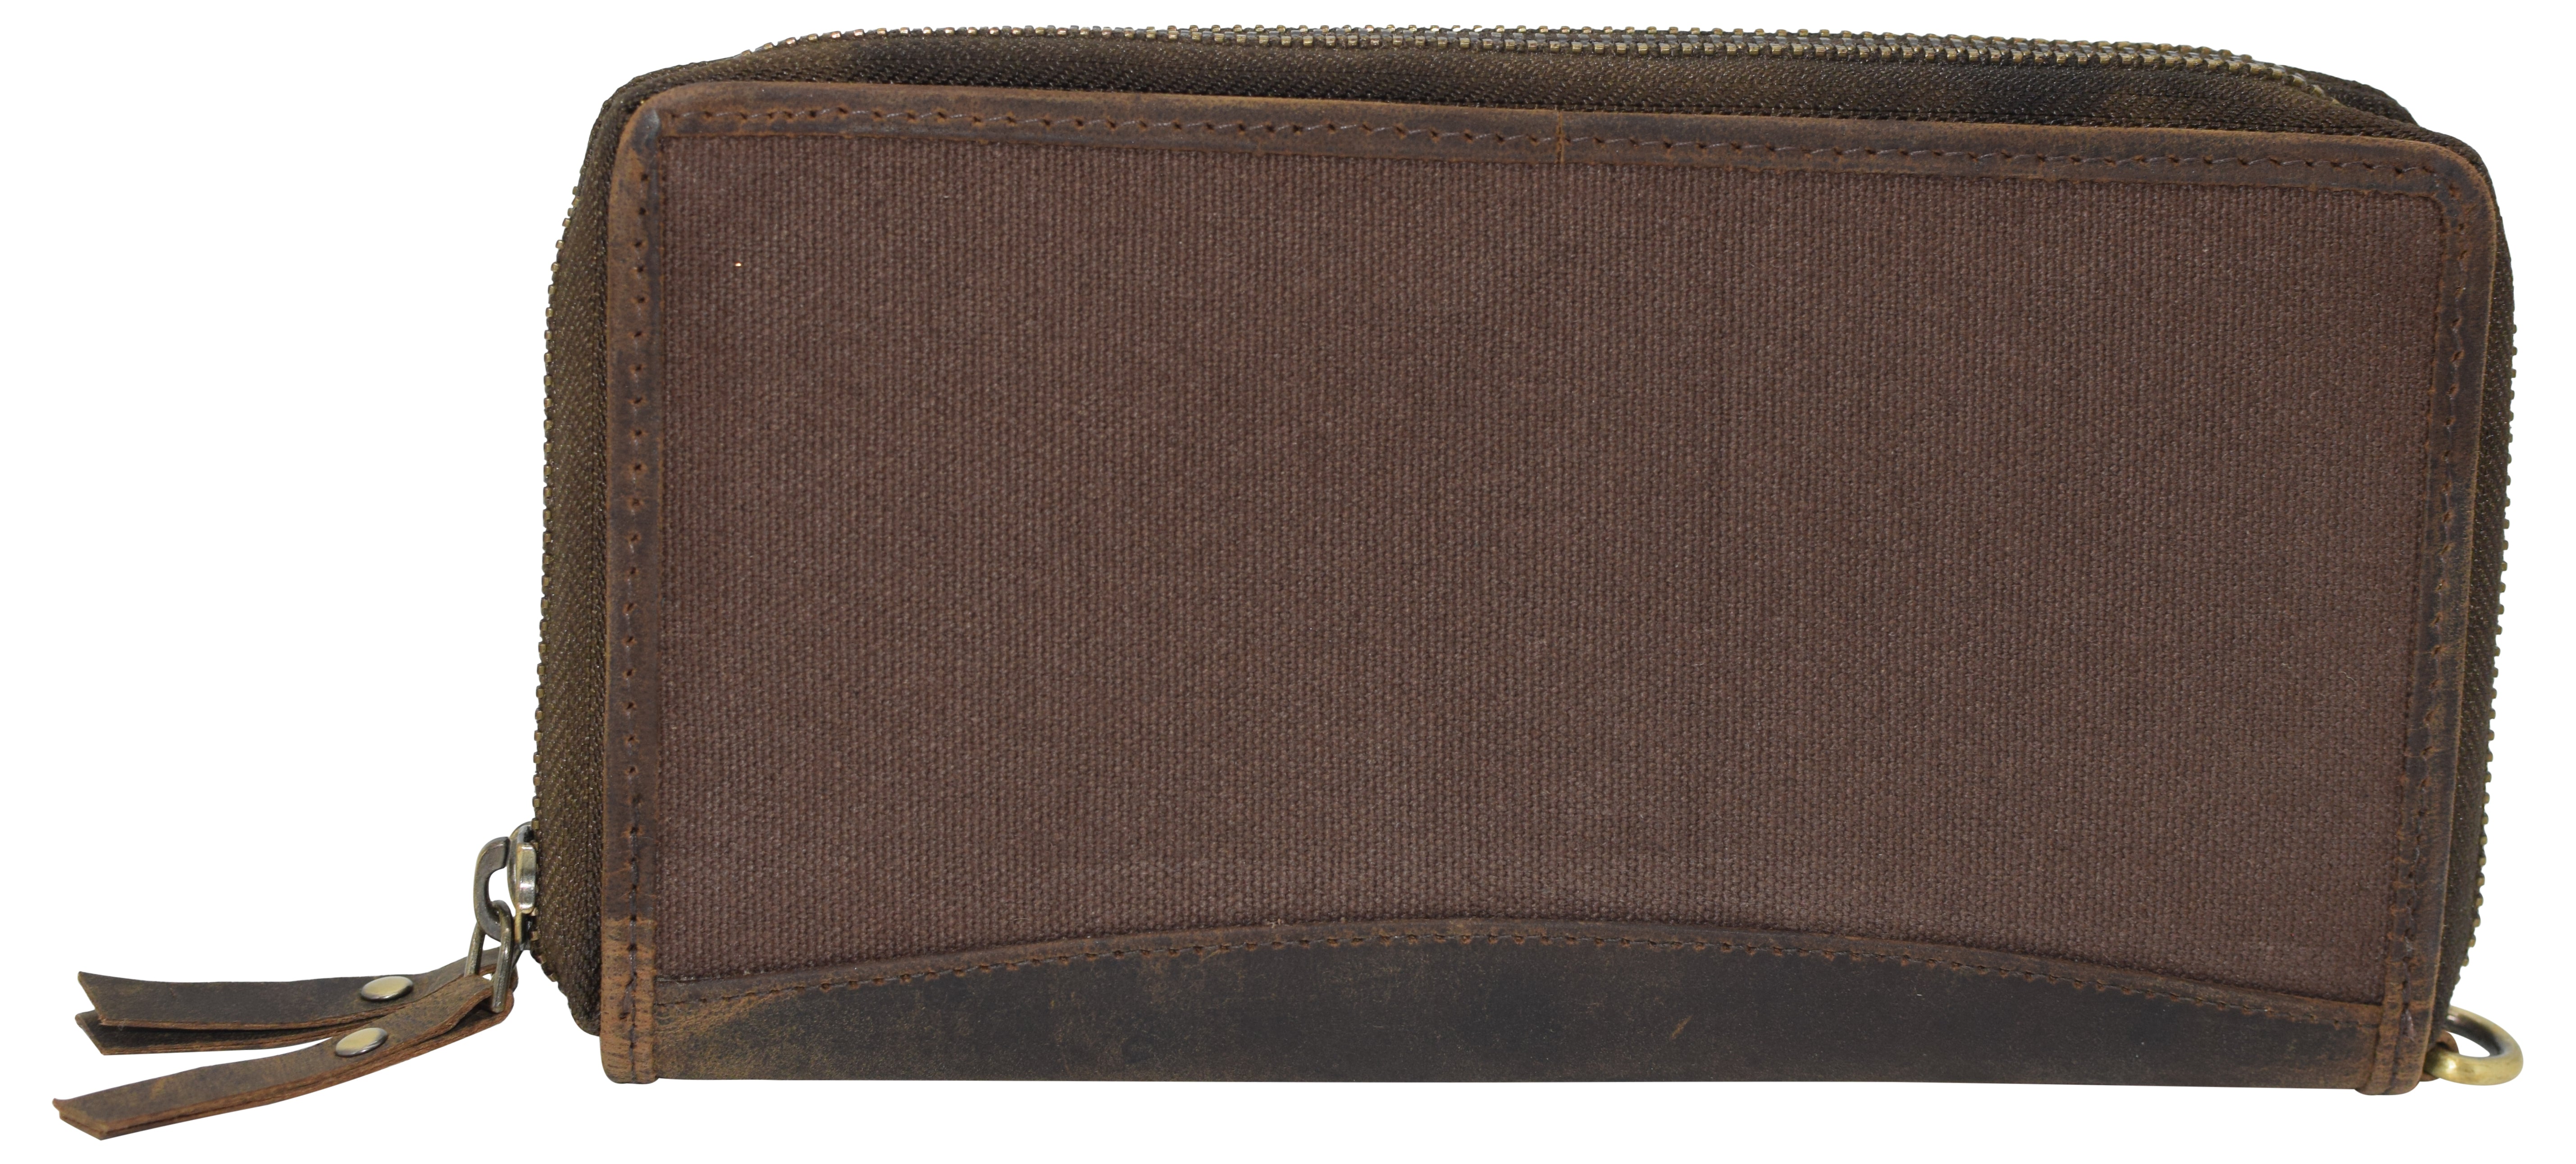 CAZORO Women's RFID Vintage Genuine Leather Wristlet Wallet 